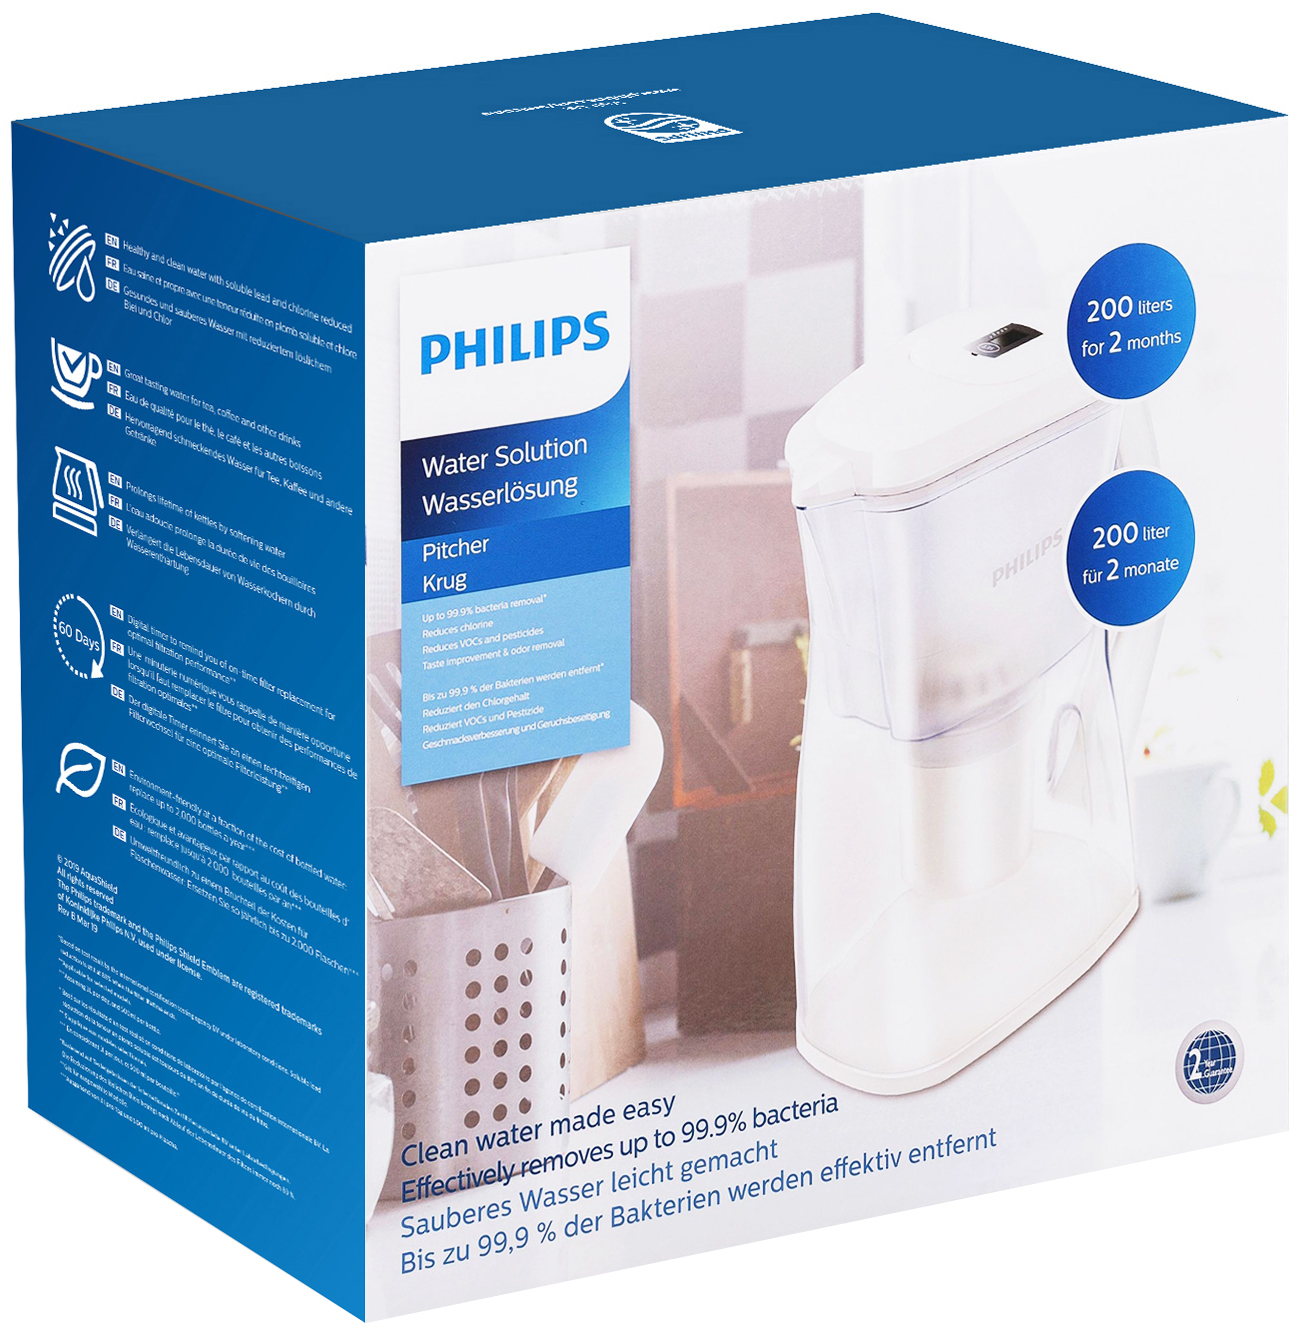 Фильтр-кувшин Philips AWP2970/10 белый